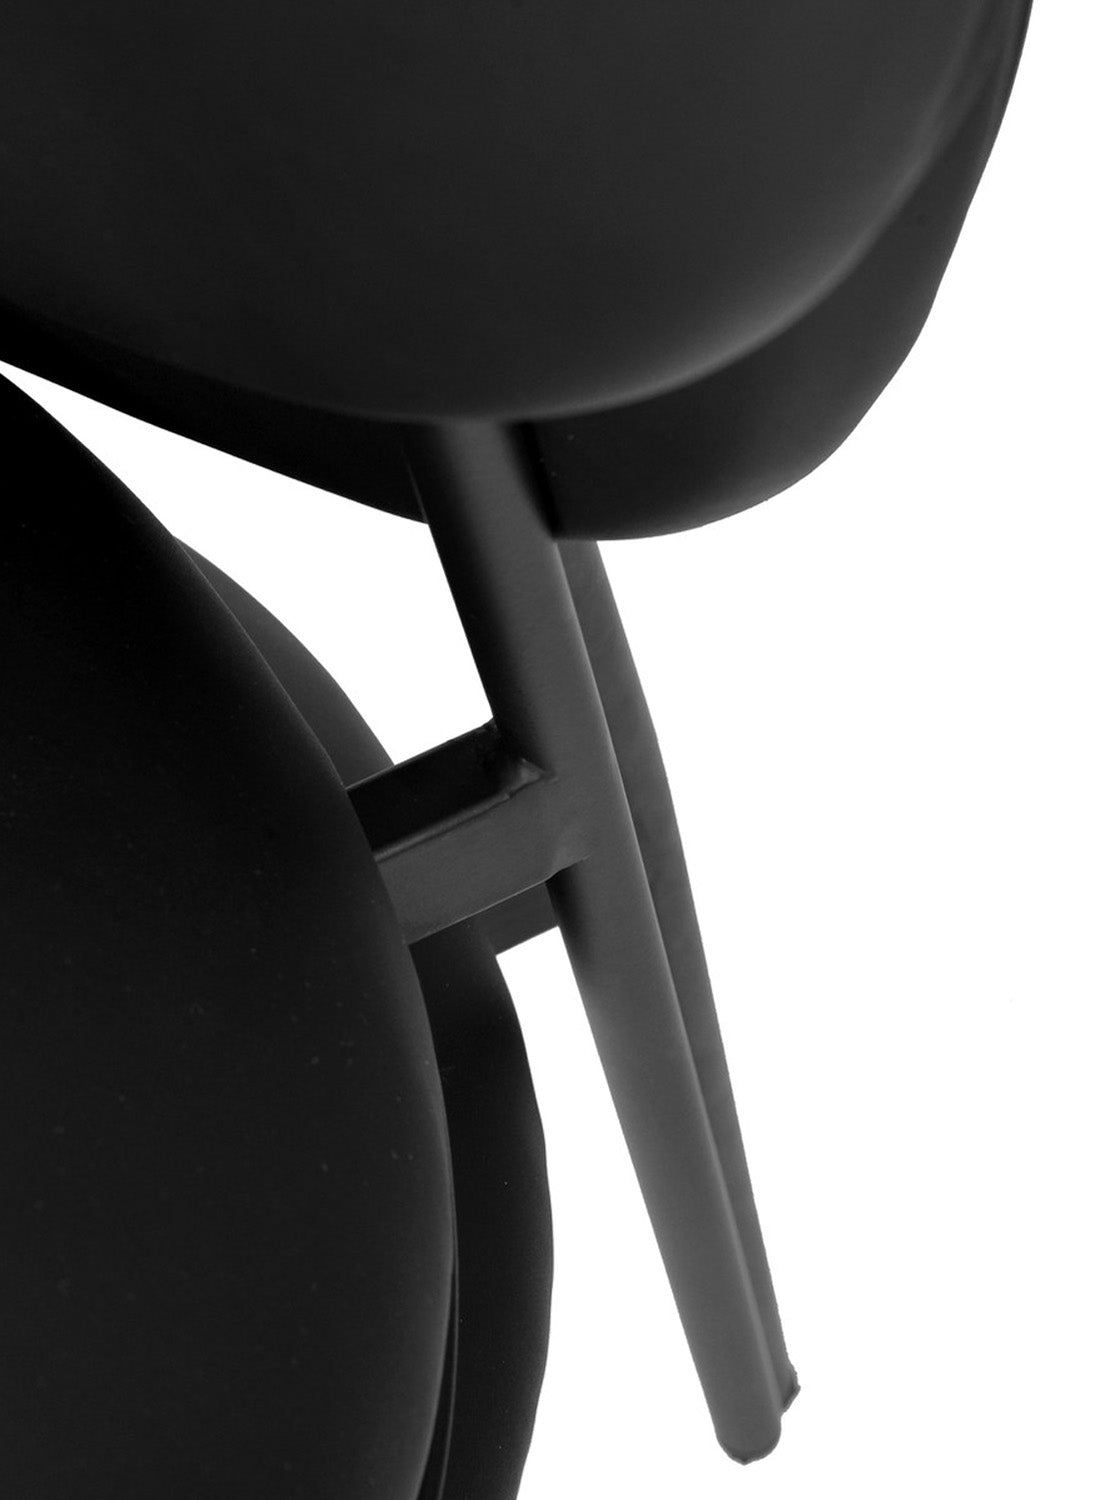 Grayson Dining Chair Set of 2, black